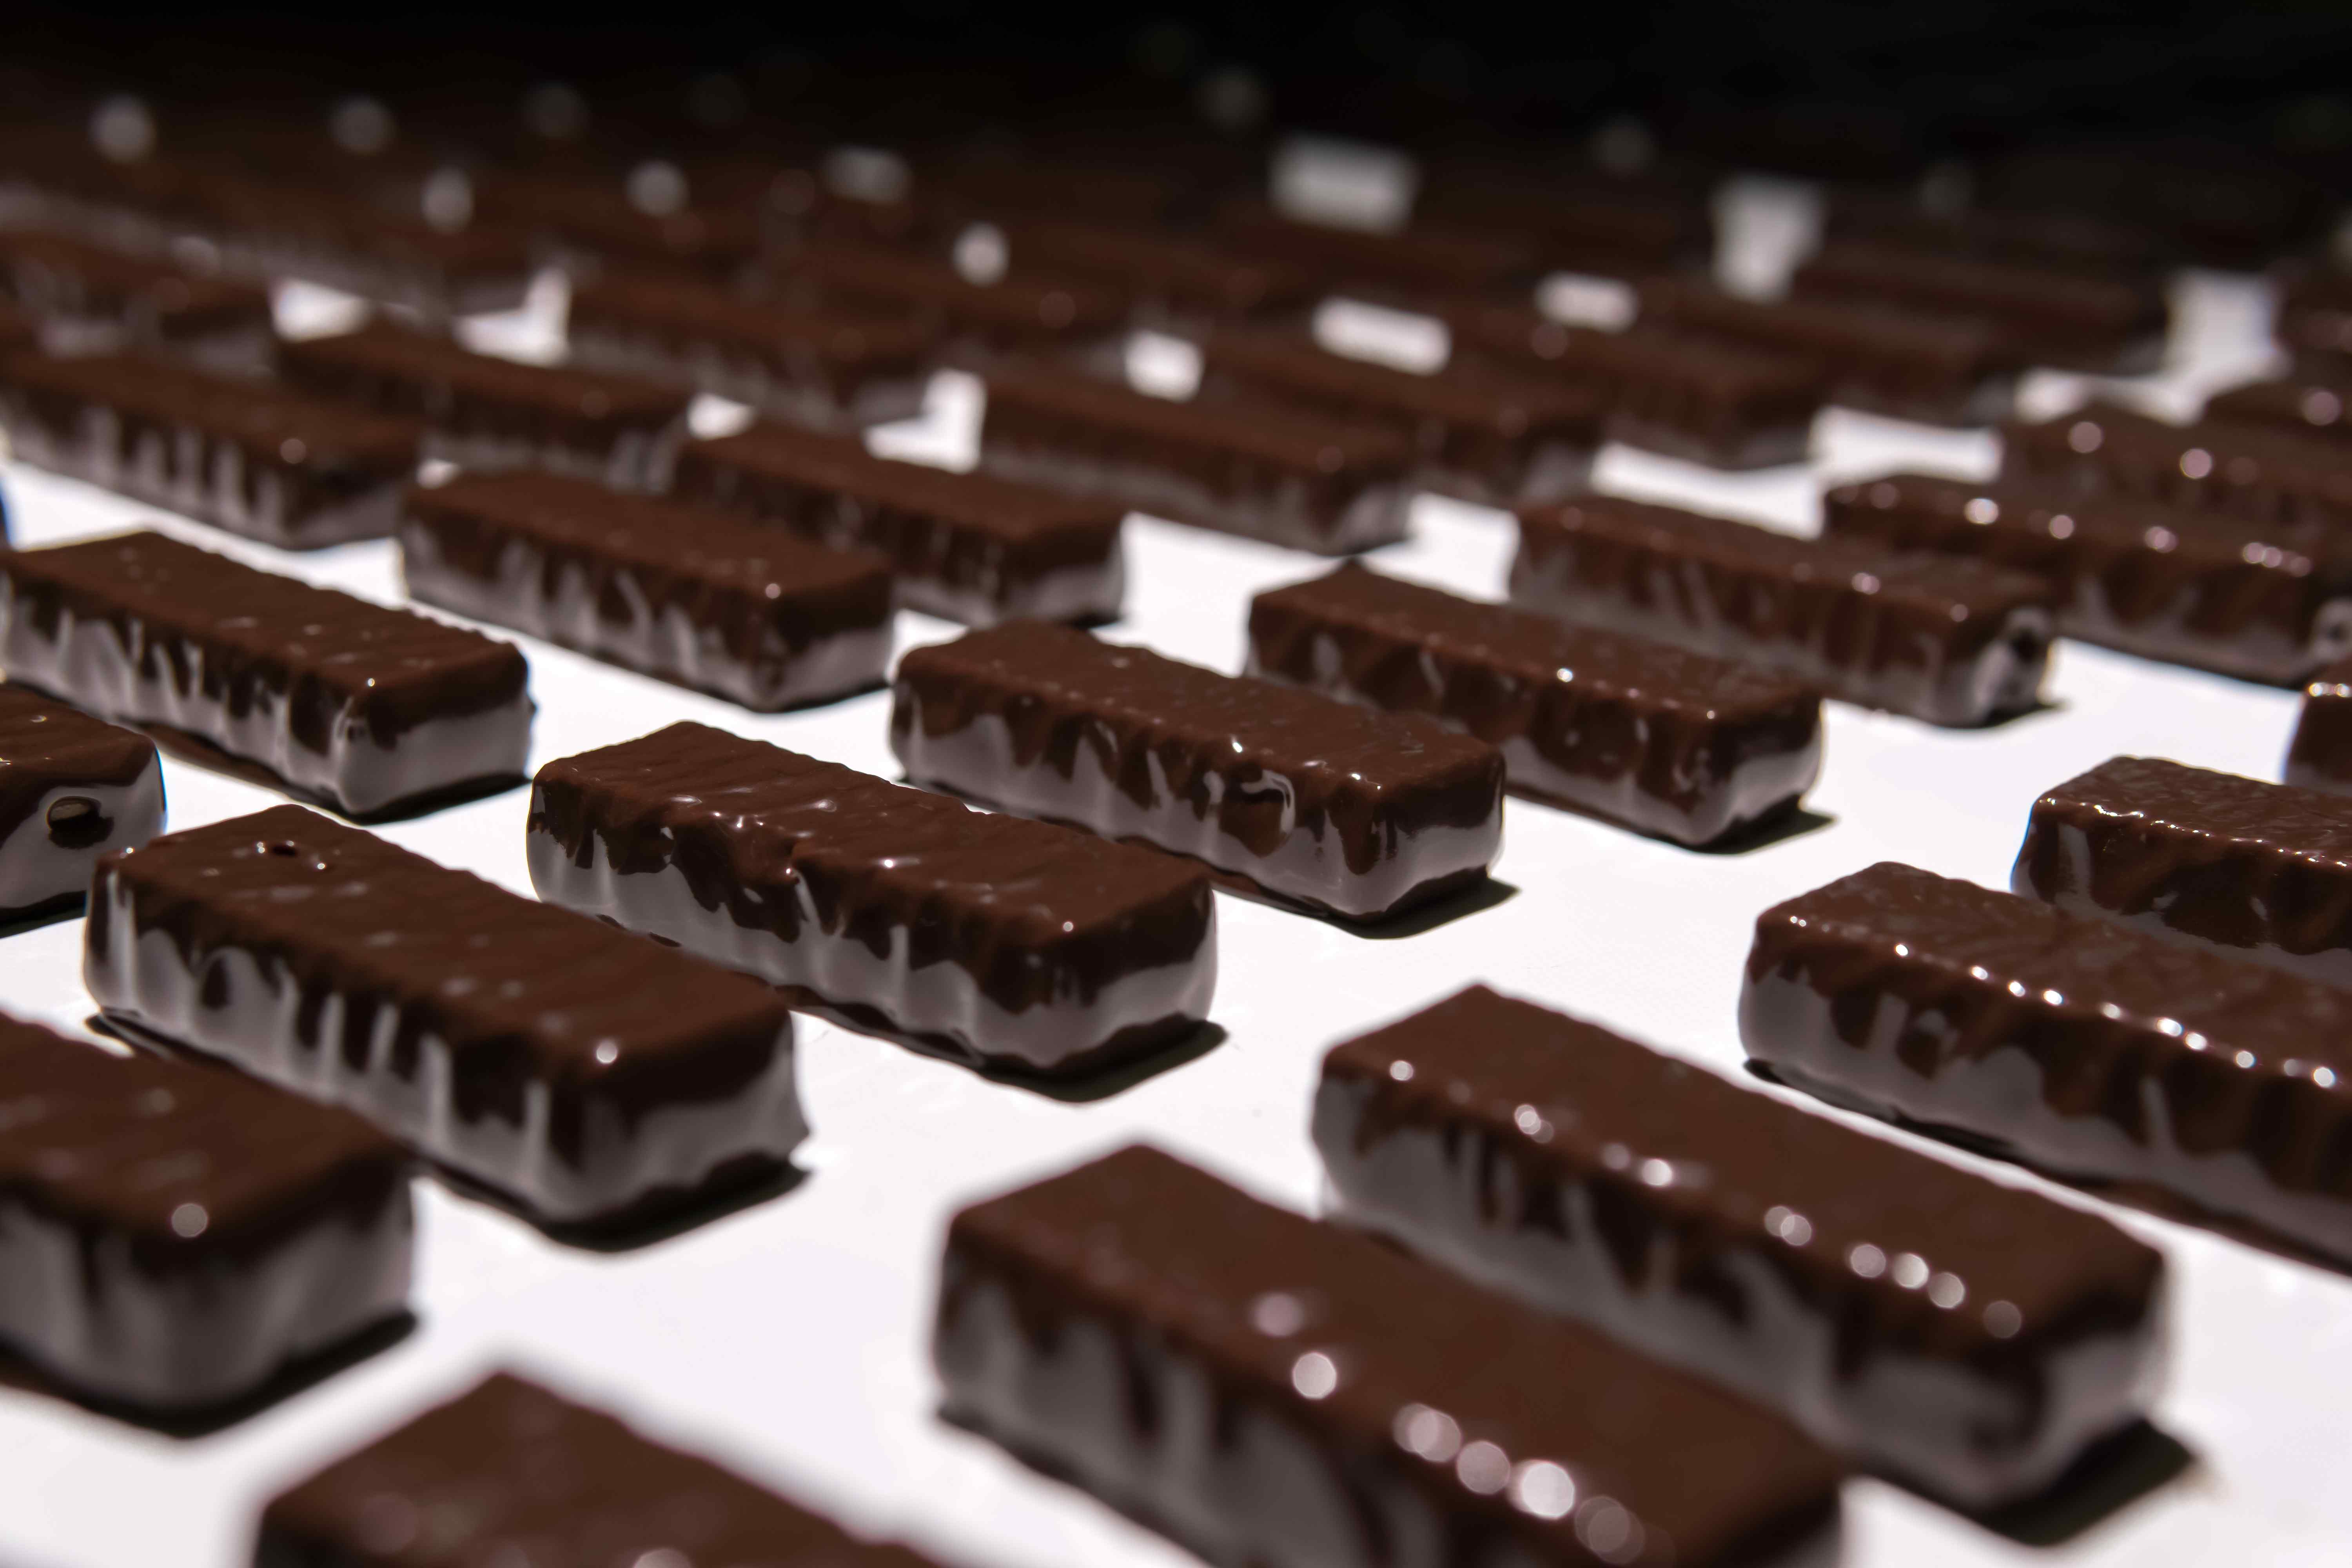 Chocolate manufacturing